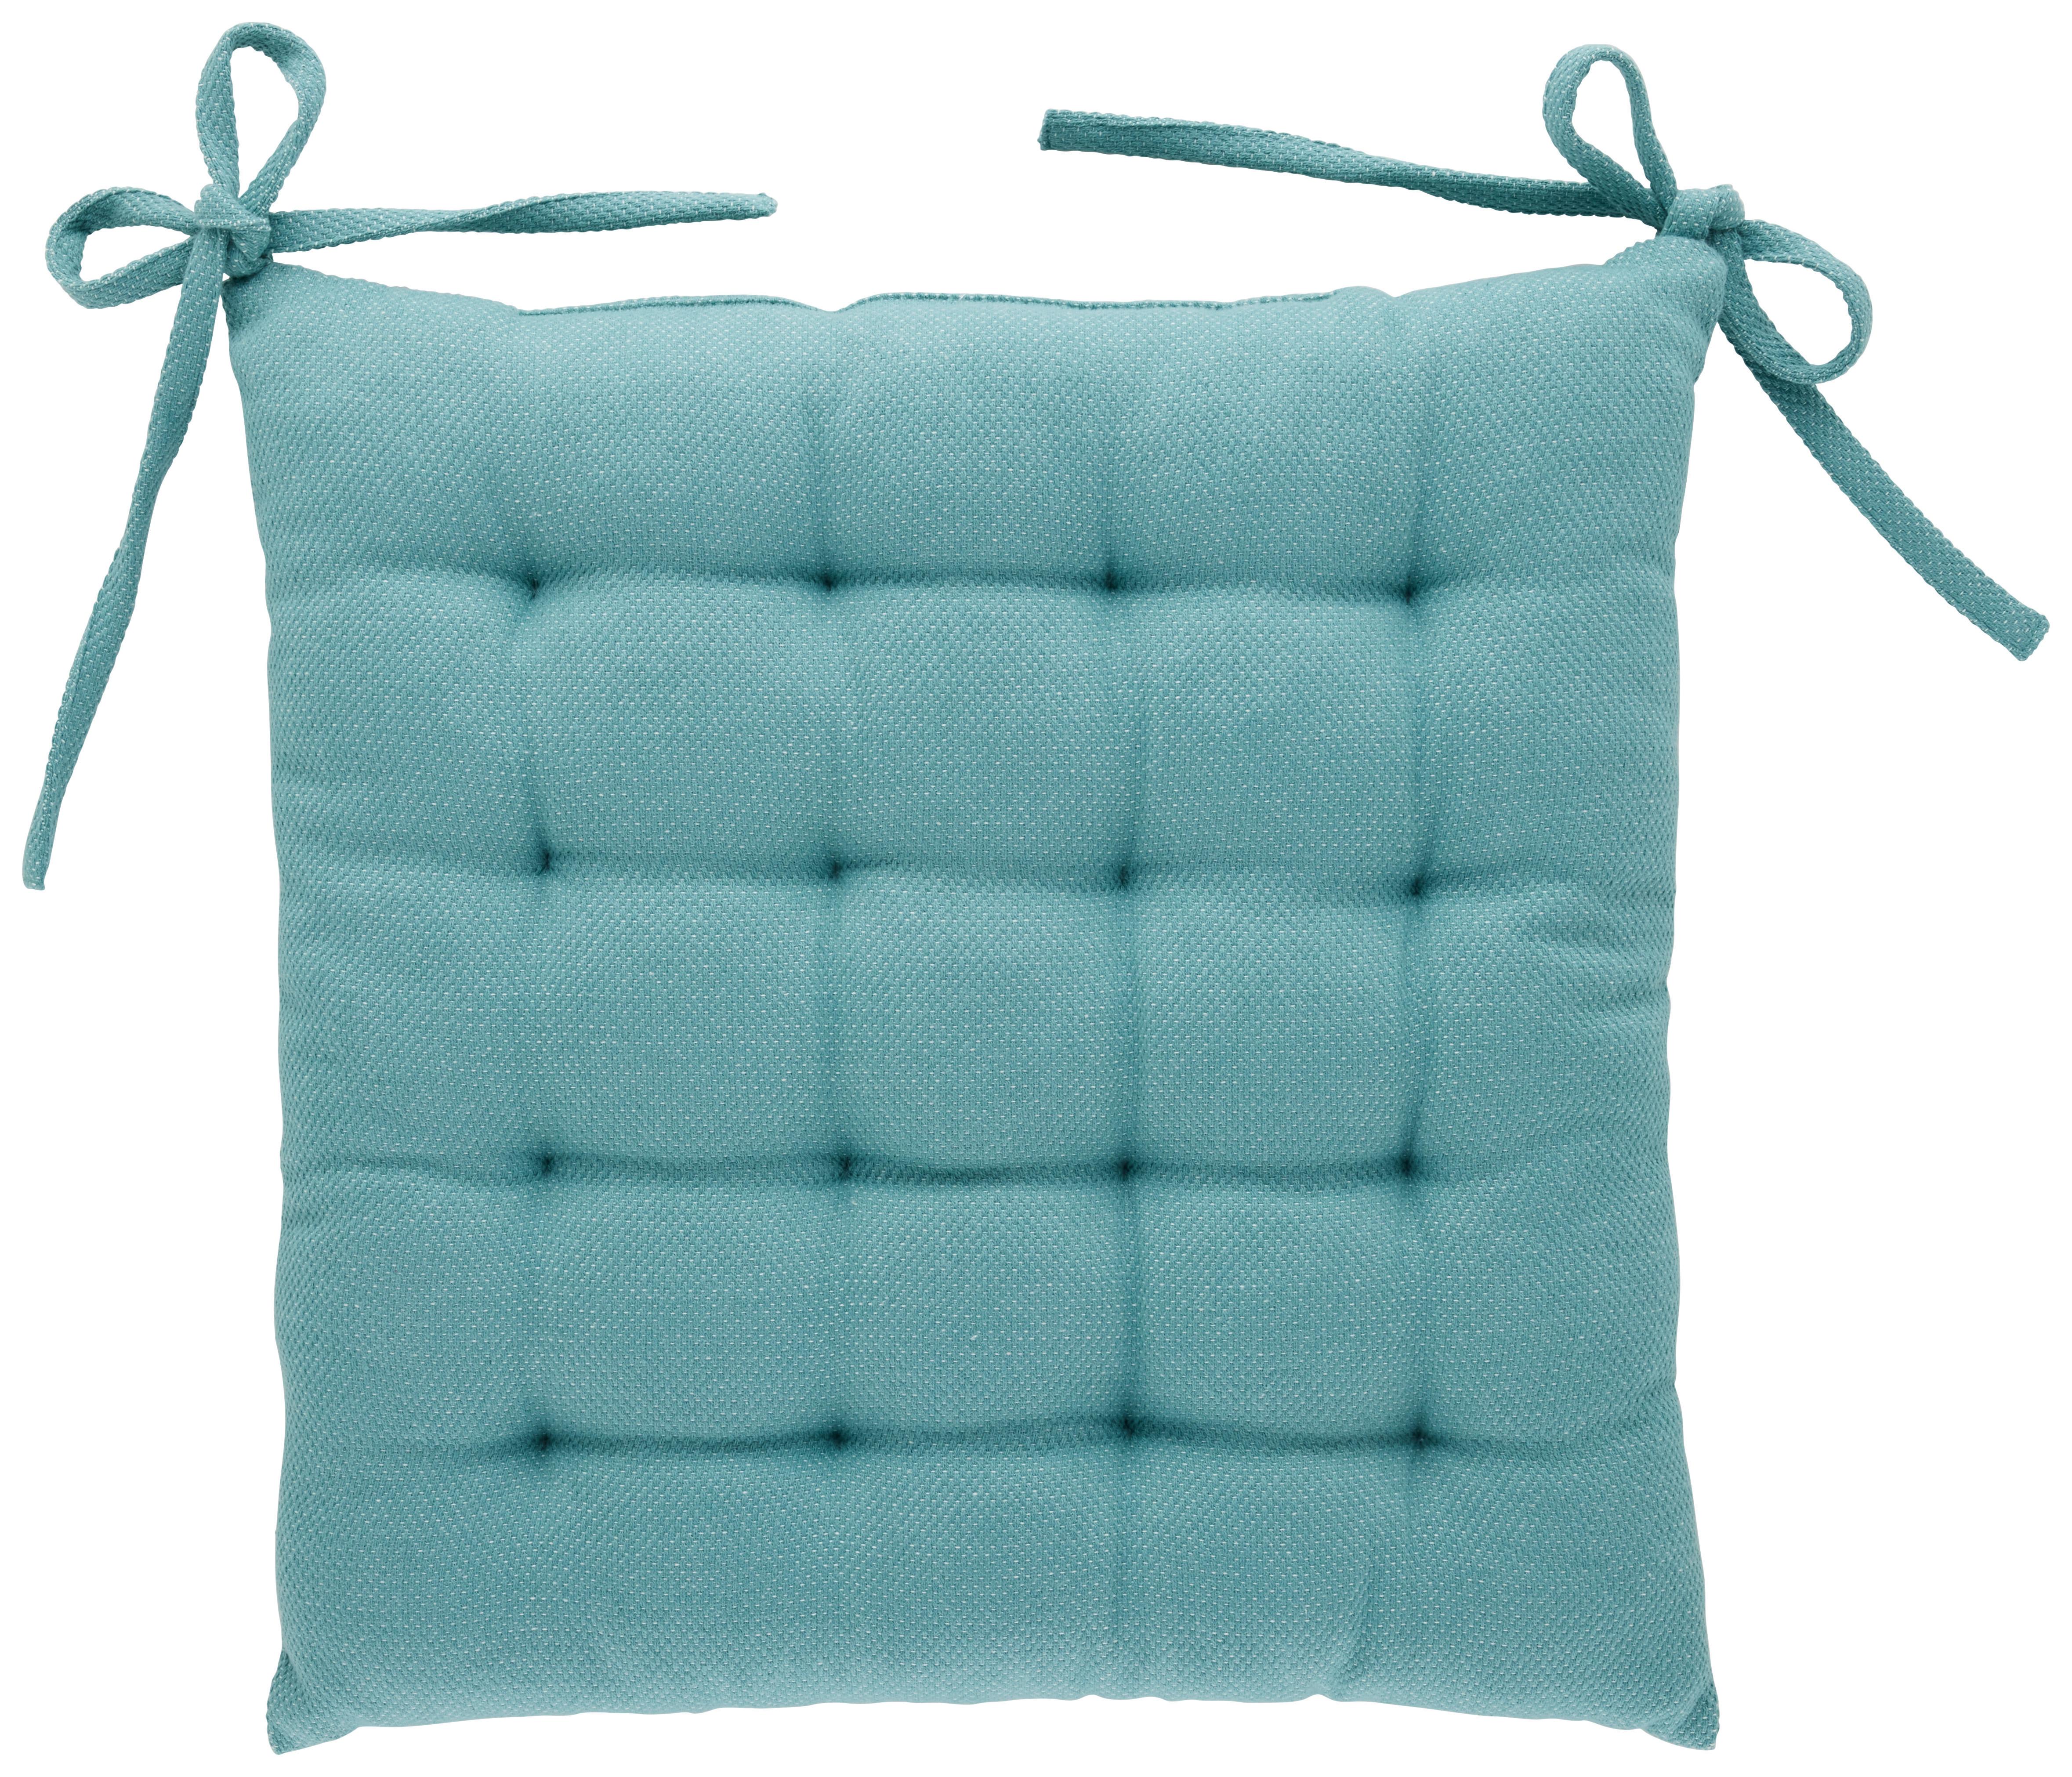 Sedežna Blazina Chris - modra, Moderno, tekstil (40/40cm) - Premium Living